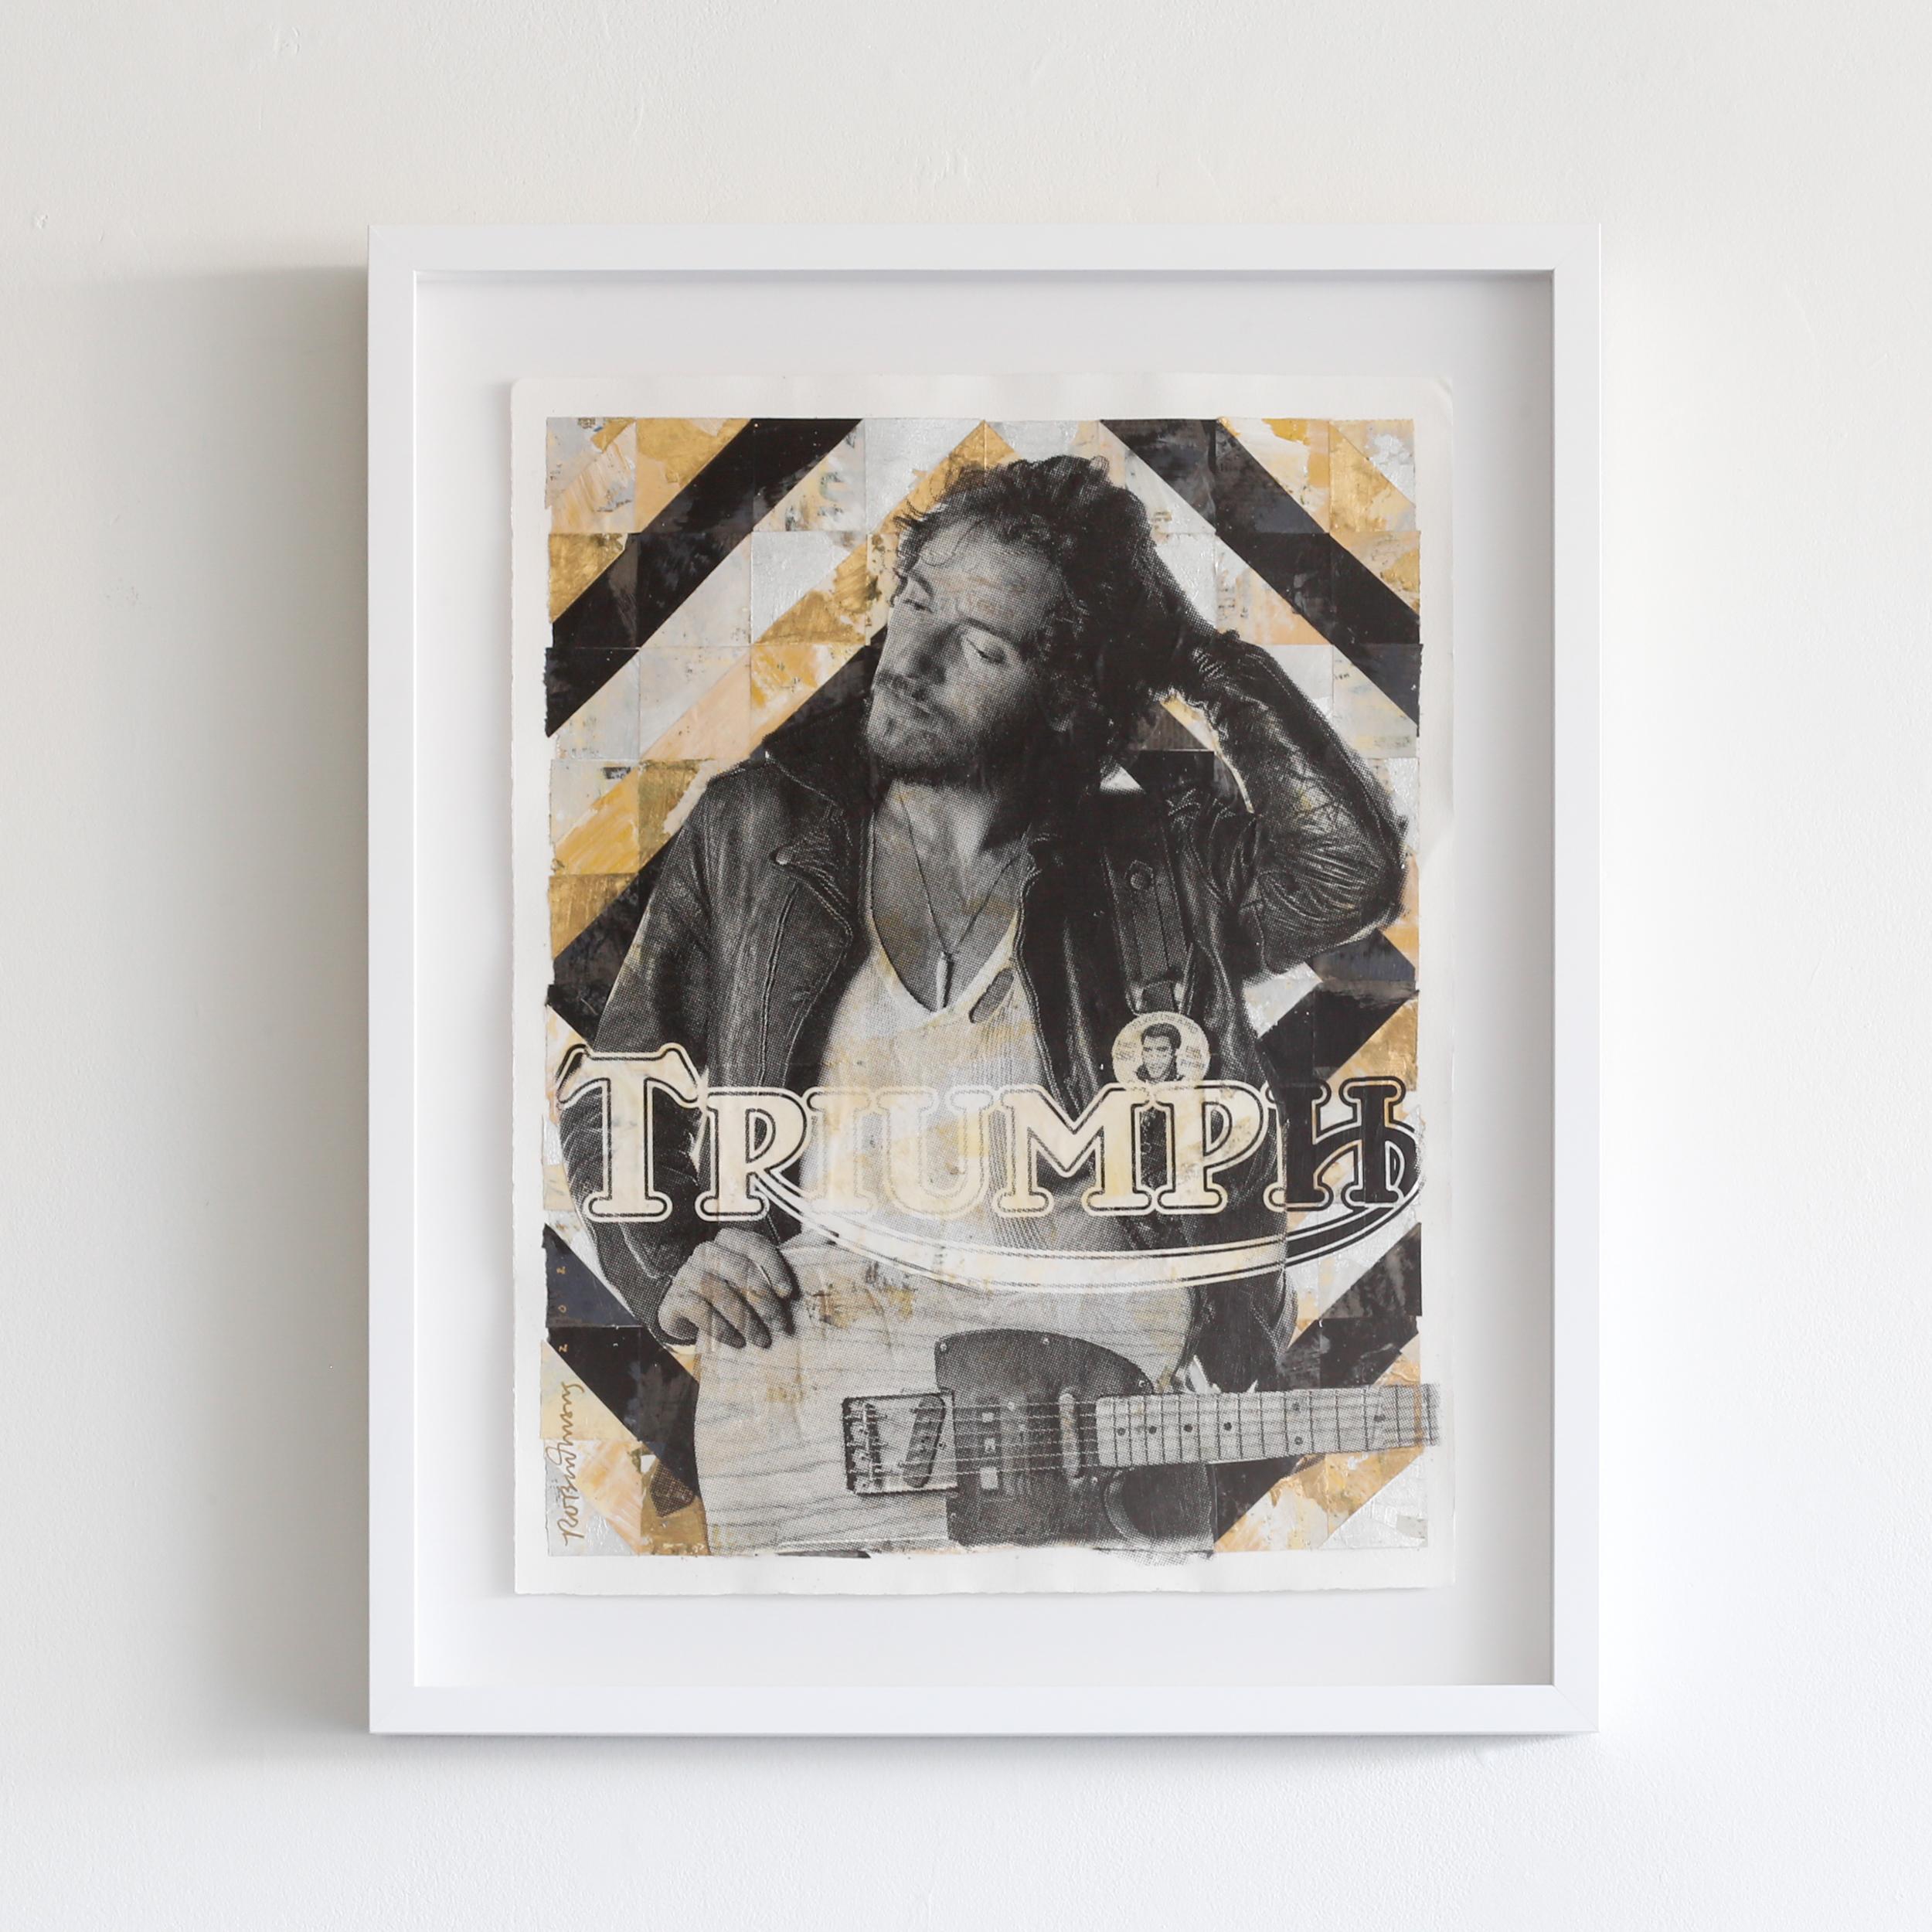 Triumph - Contemporary Mixed Media Art by Robert Mars